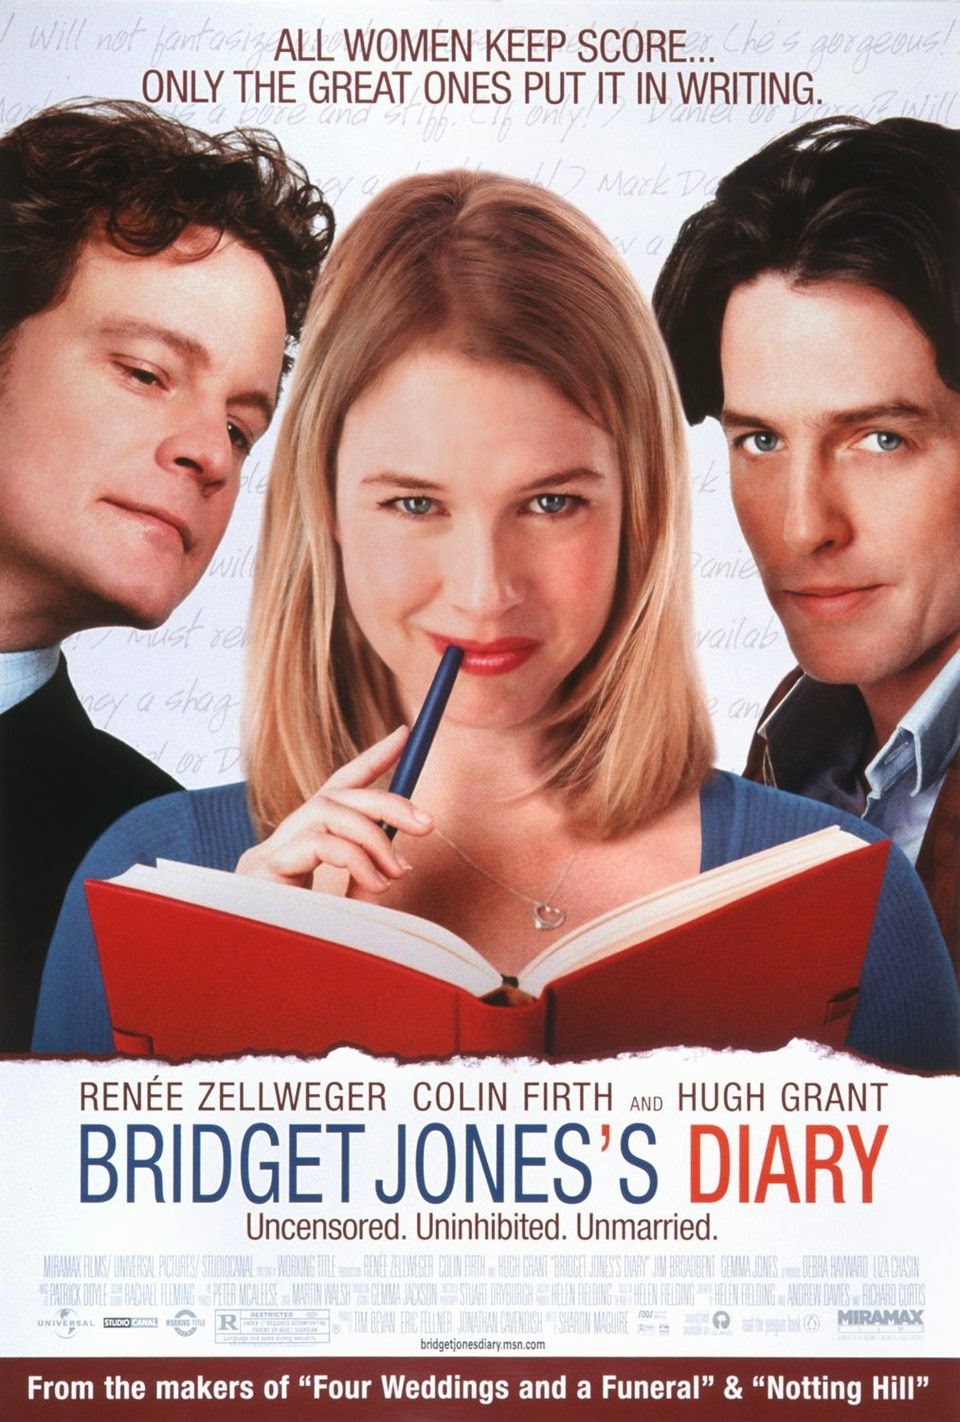 O Diario De Bridget Jones [2001]